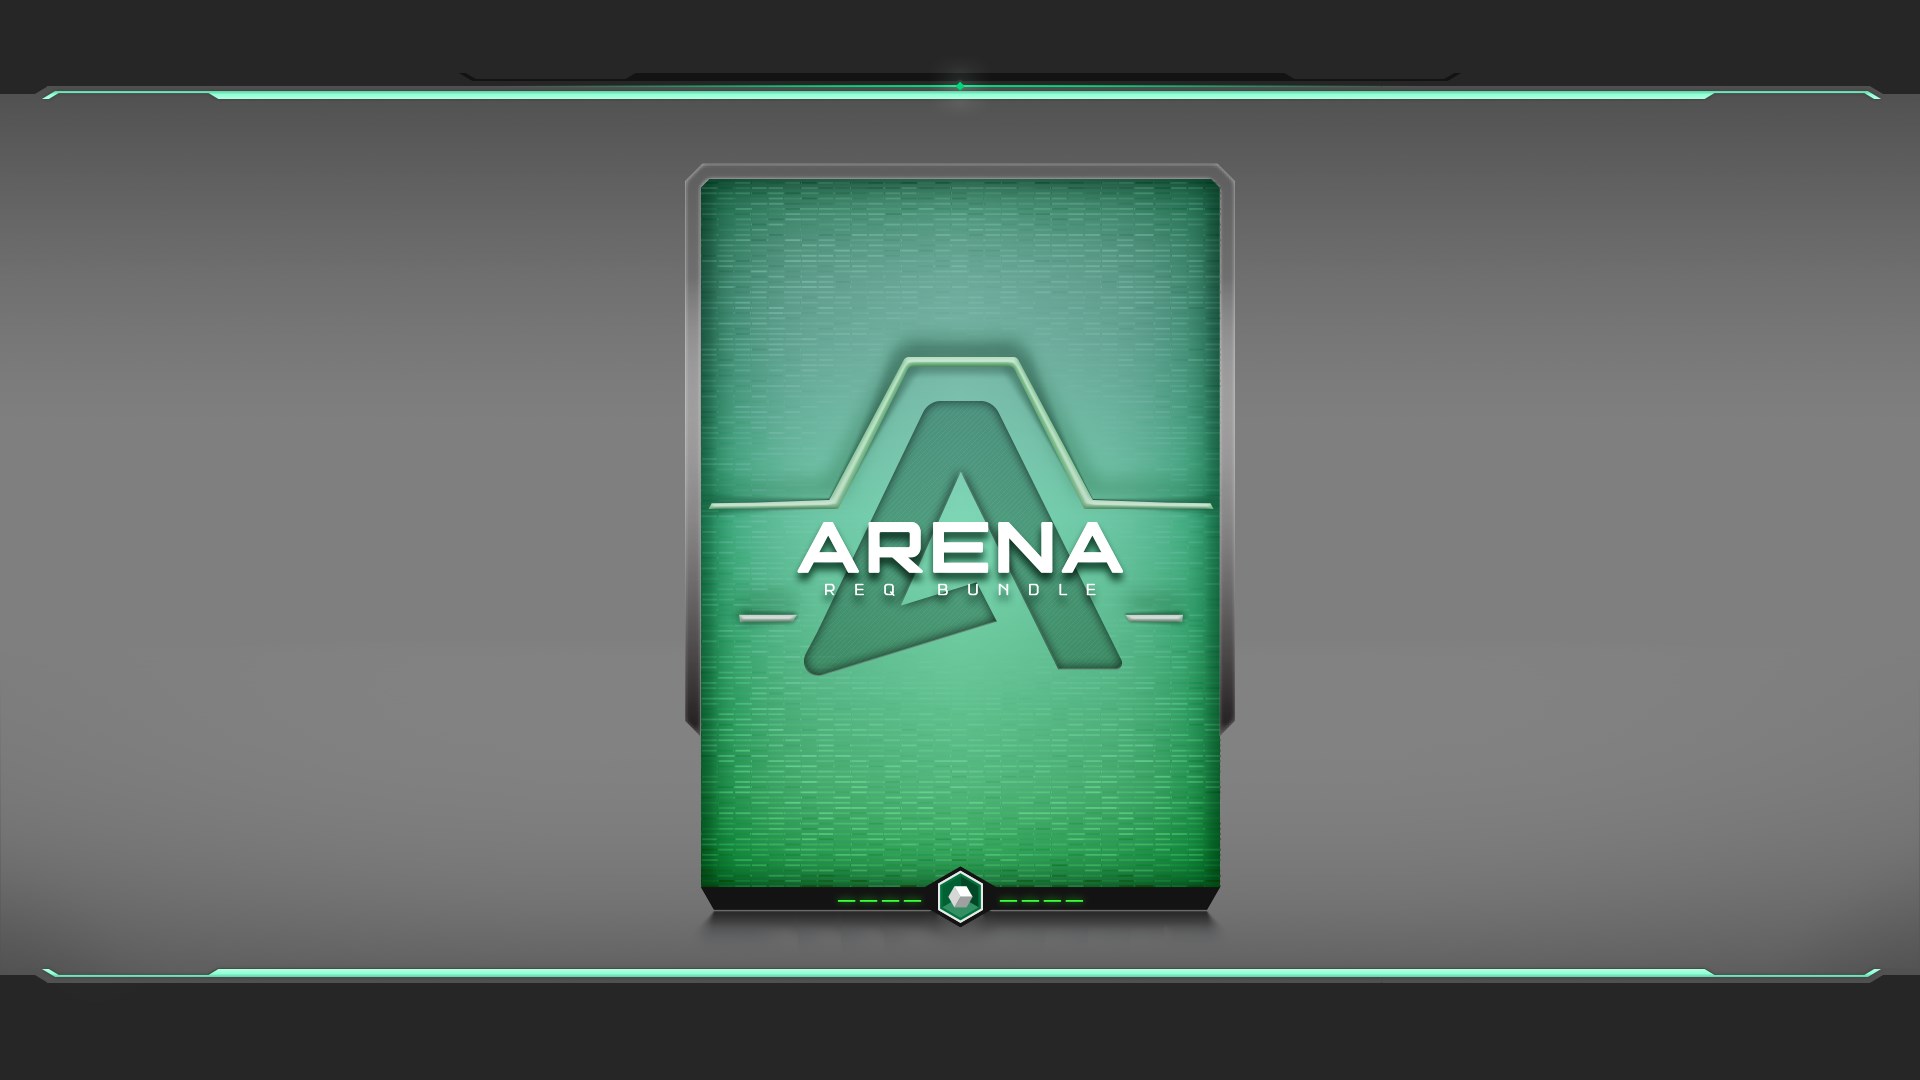 Halo 5 Guardians - Arena REQ Bundle DLC EU XBOX One CD Key, 26.55 usd